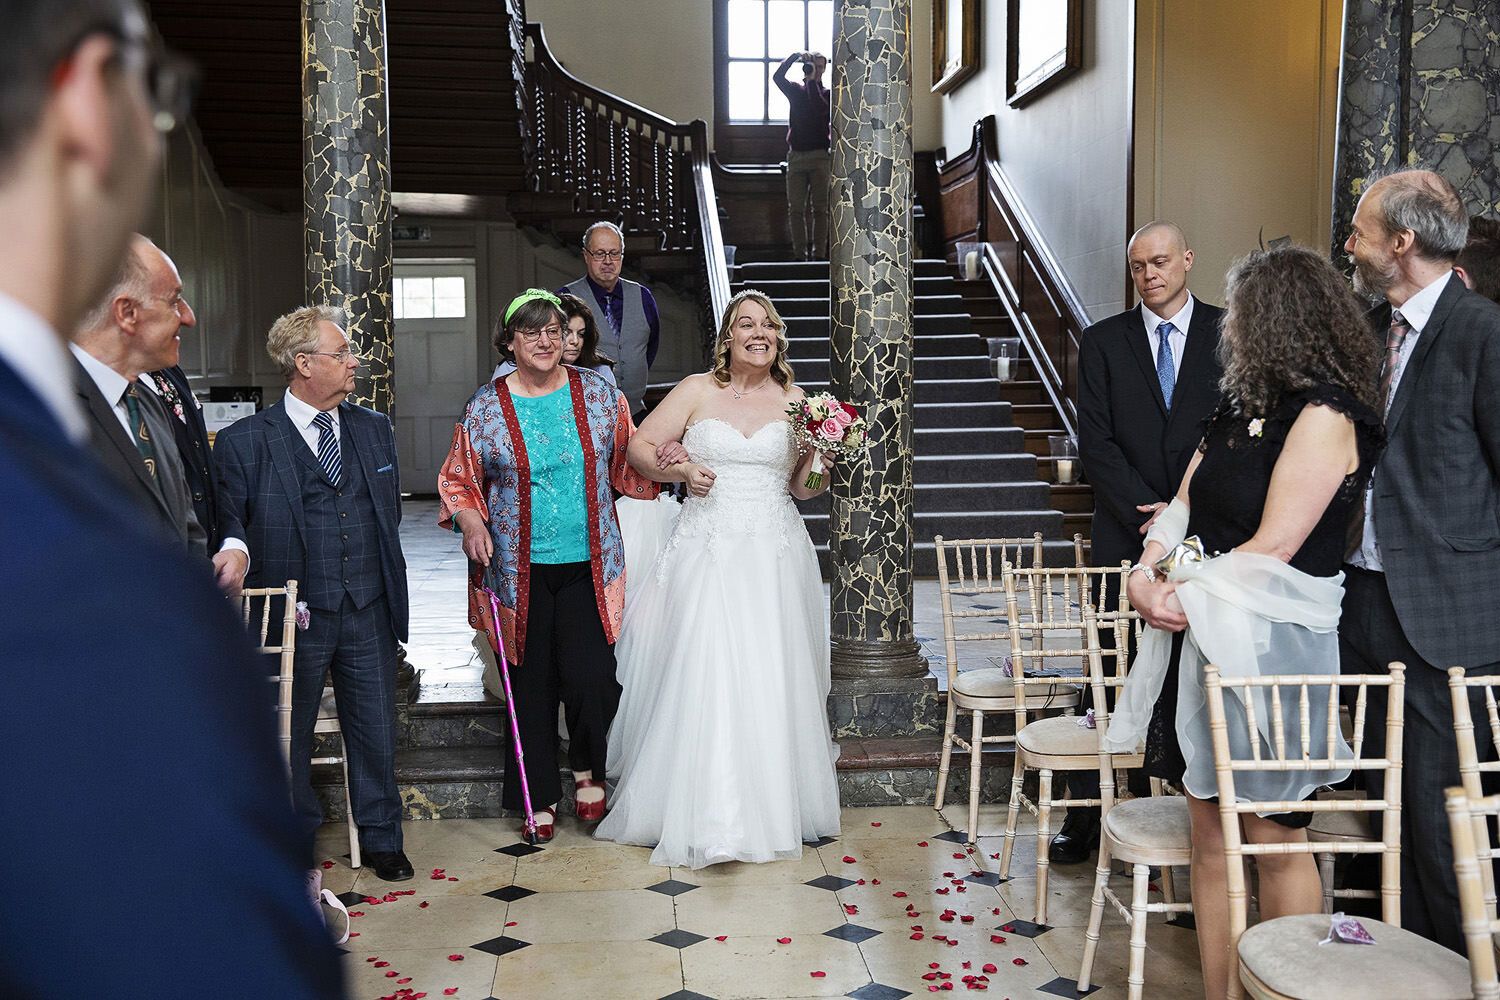 Chicheley Hall wedding photos (36).jpg